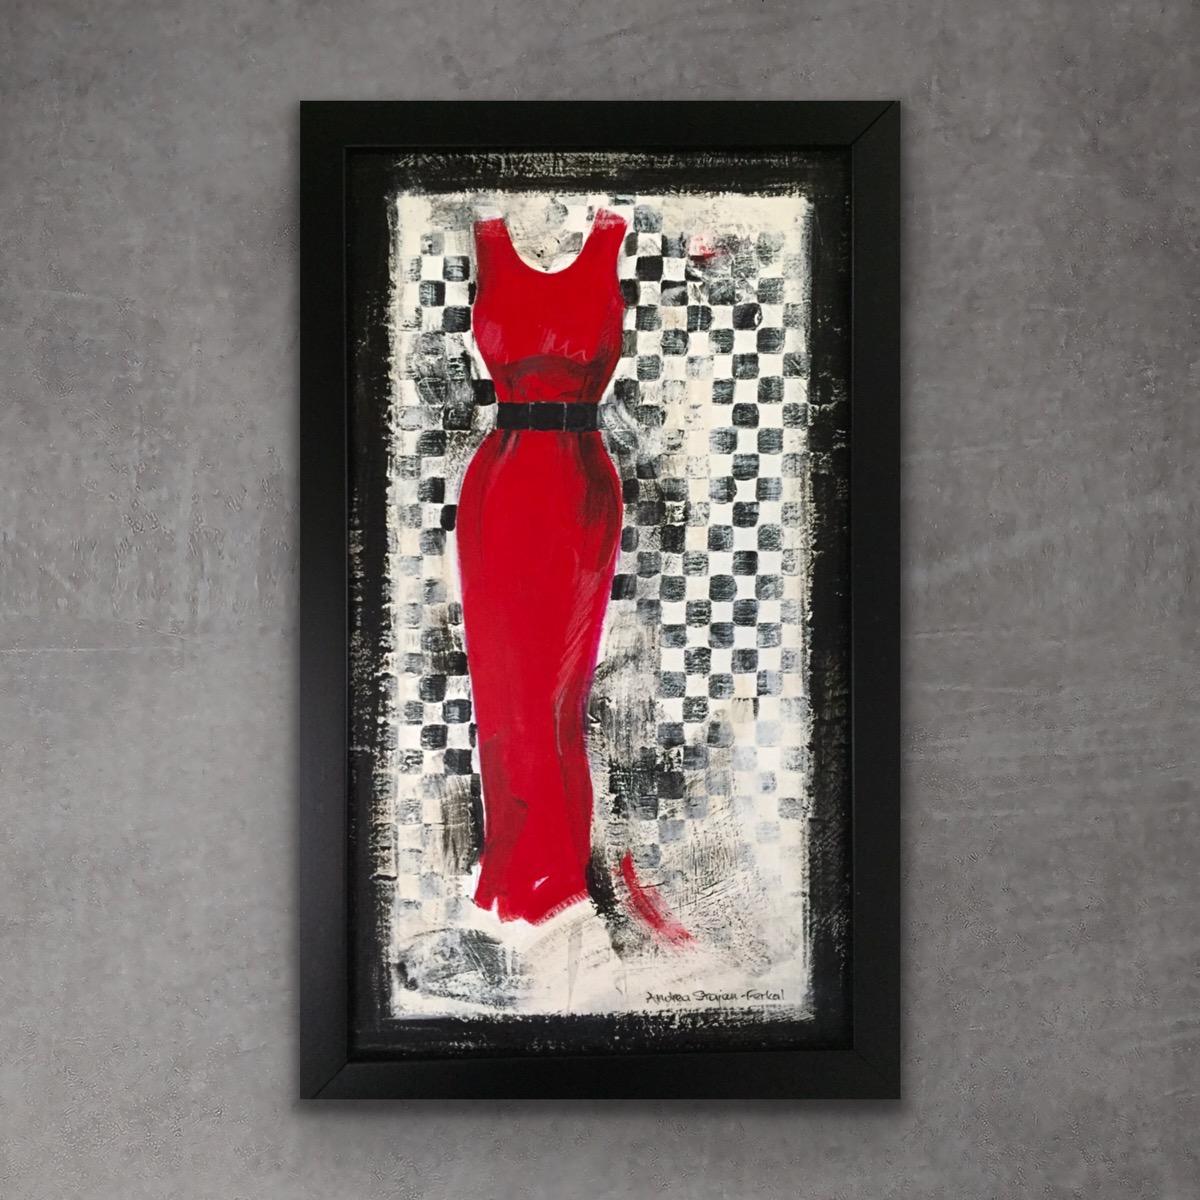 Going Retro - 2 (Rotes, Vintage-inspiriertes Kleid) – Painting von Andrea Stajan-Ferkul